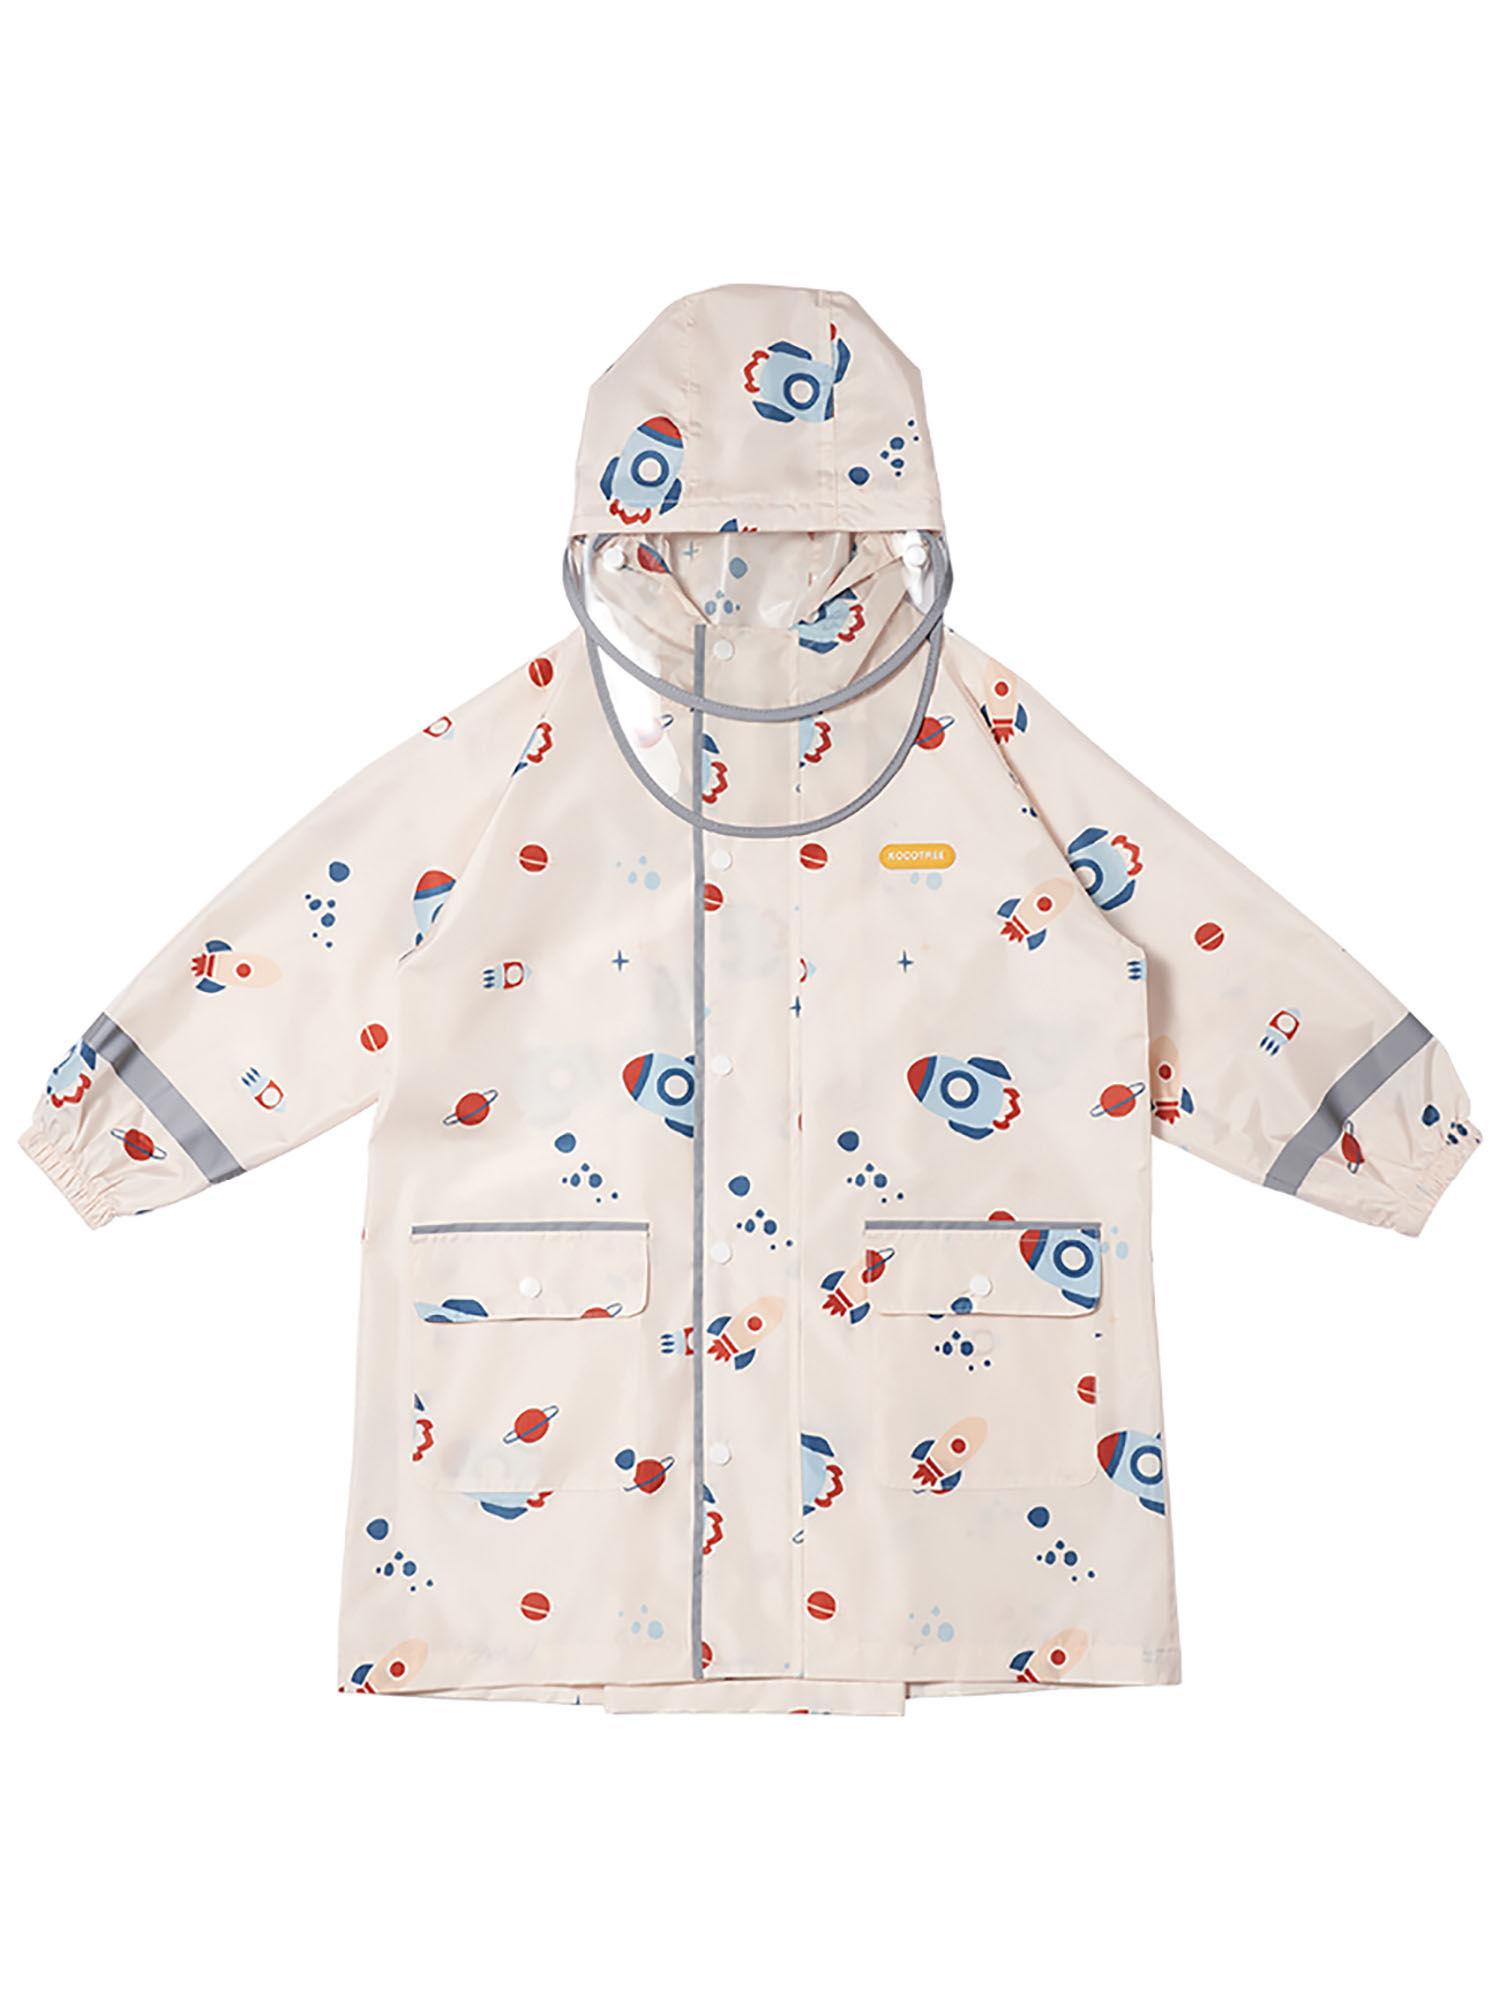 kids raincoat jacket style rocket galaxy theme,cream